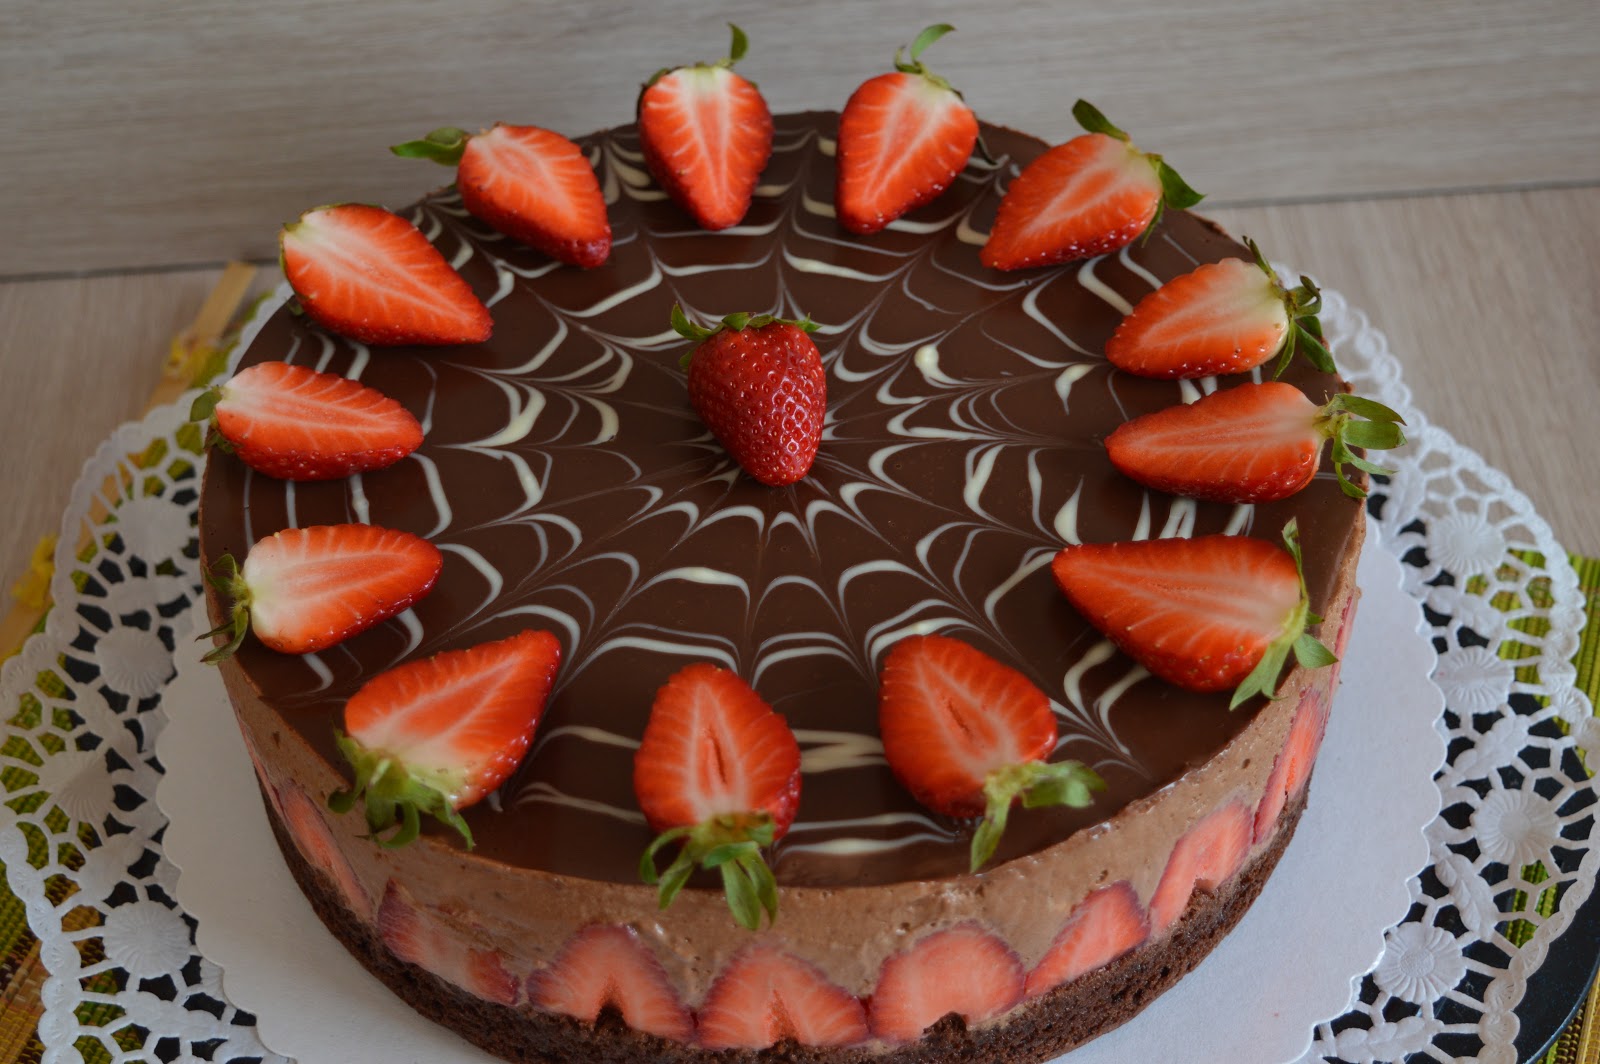 Julias zuckersüße Kuchenwelt: Schoko-Erdbeer-Mousse-Torte